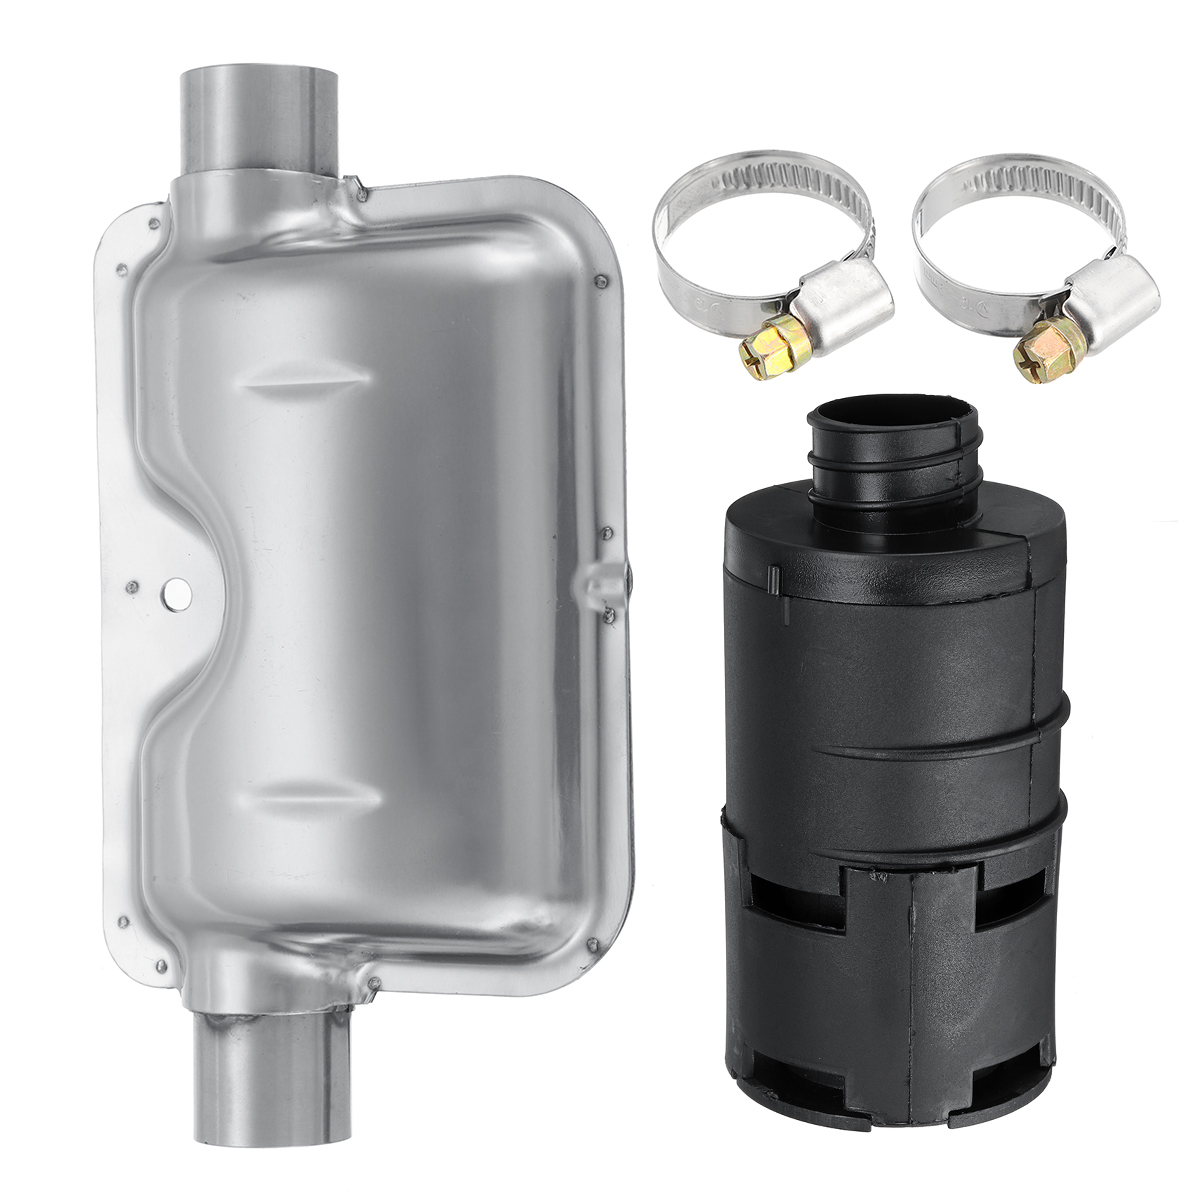 Diesel-Heater-Exhaust-Muffler-Pipe-Silencer-Clamps-Bracket-1366648-4